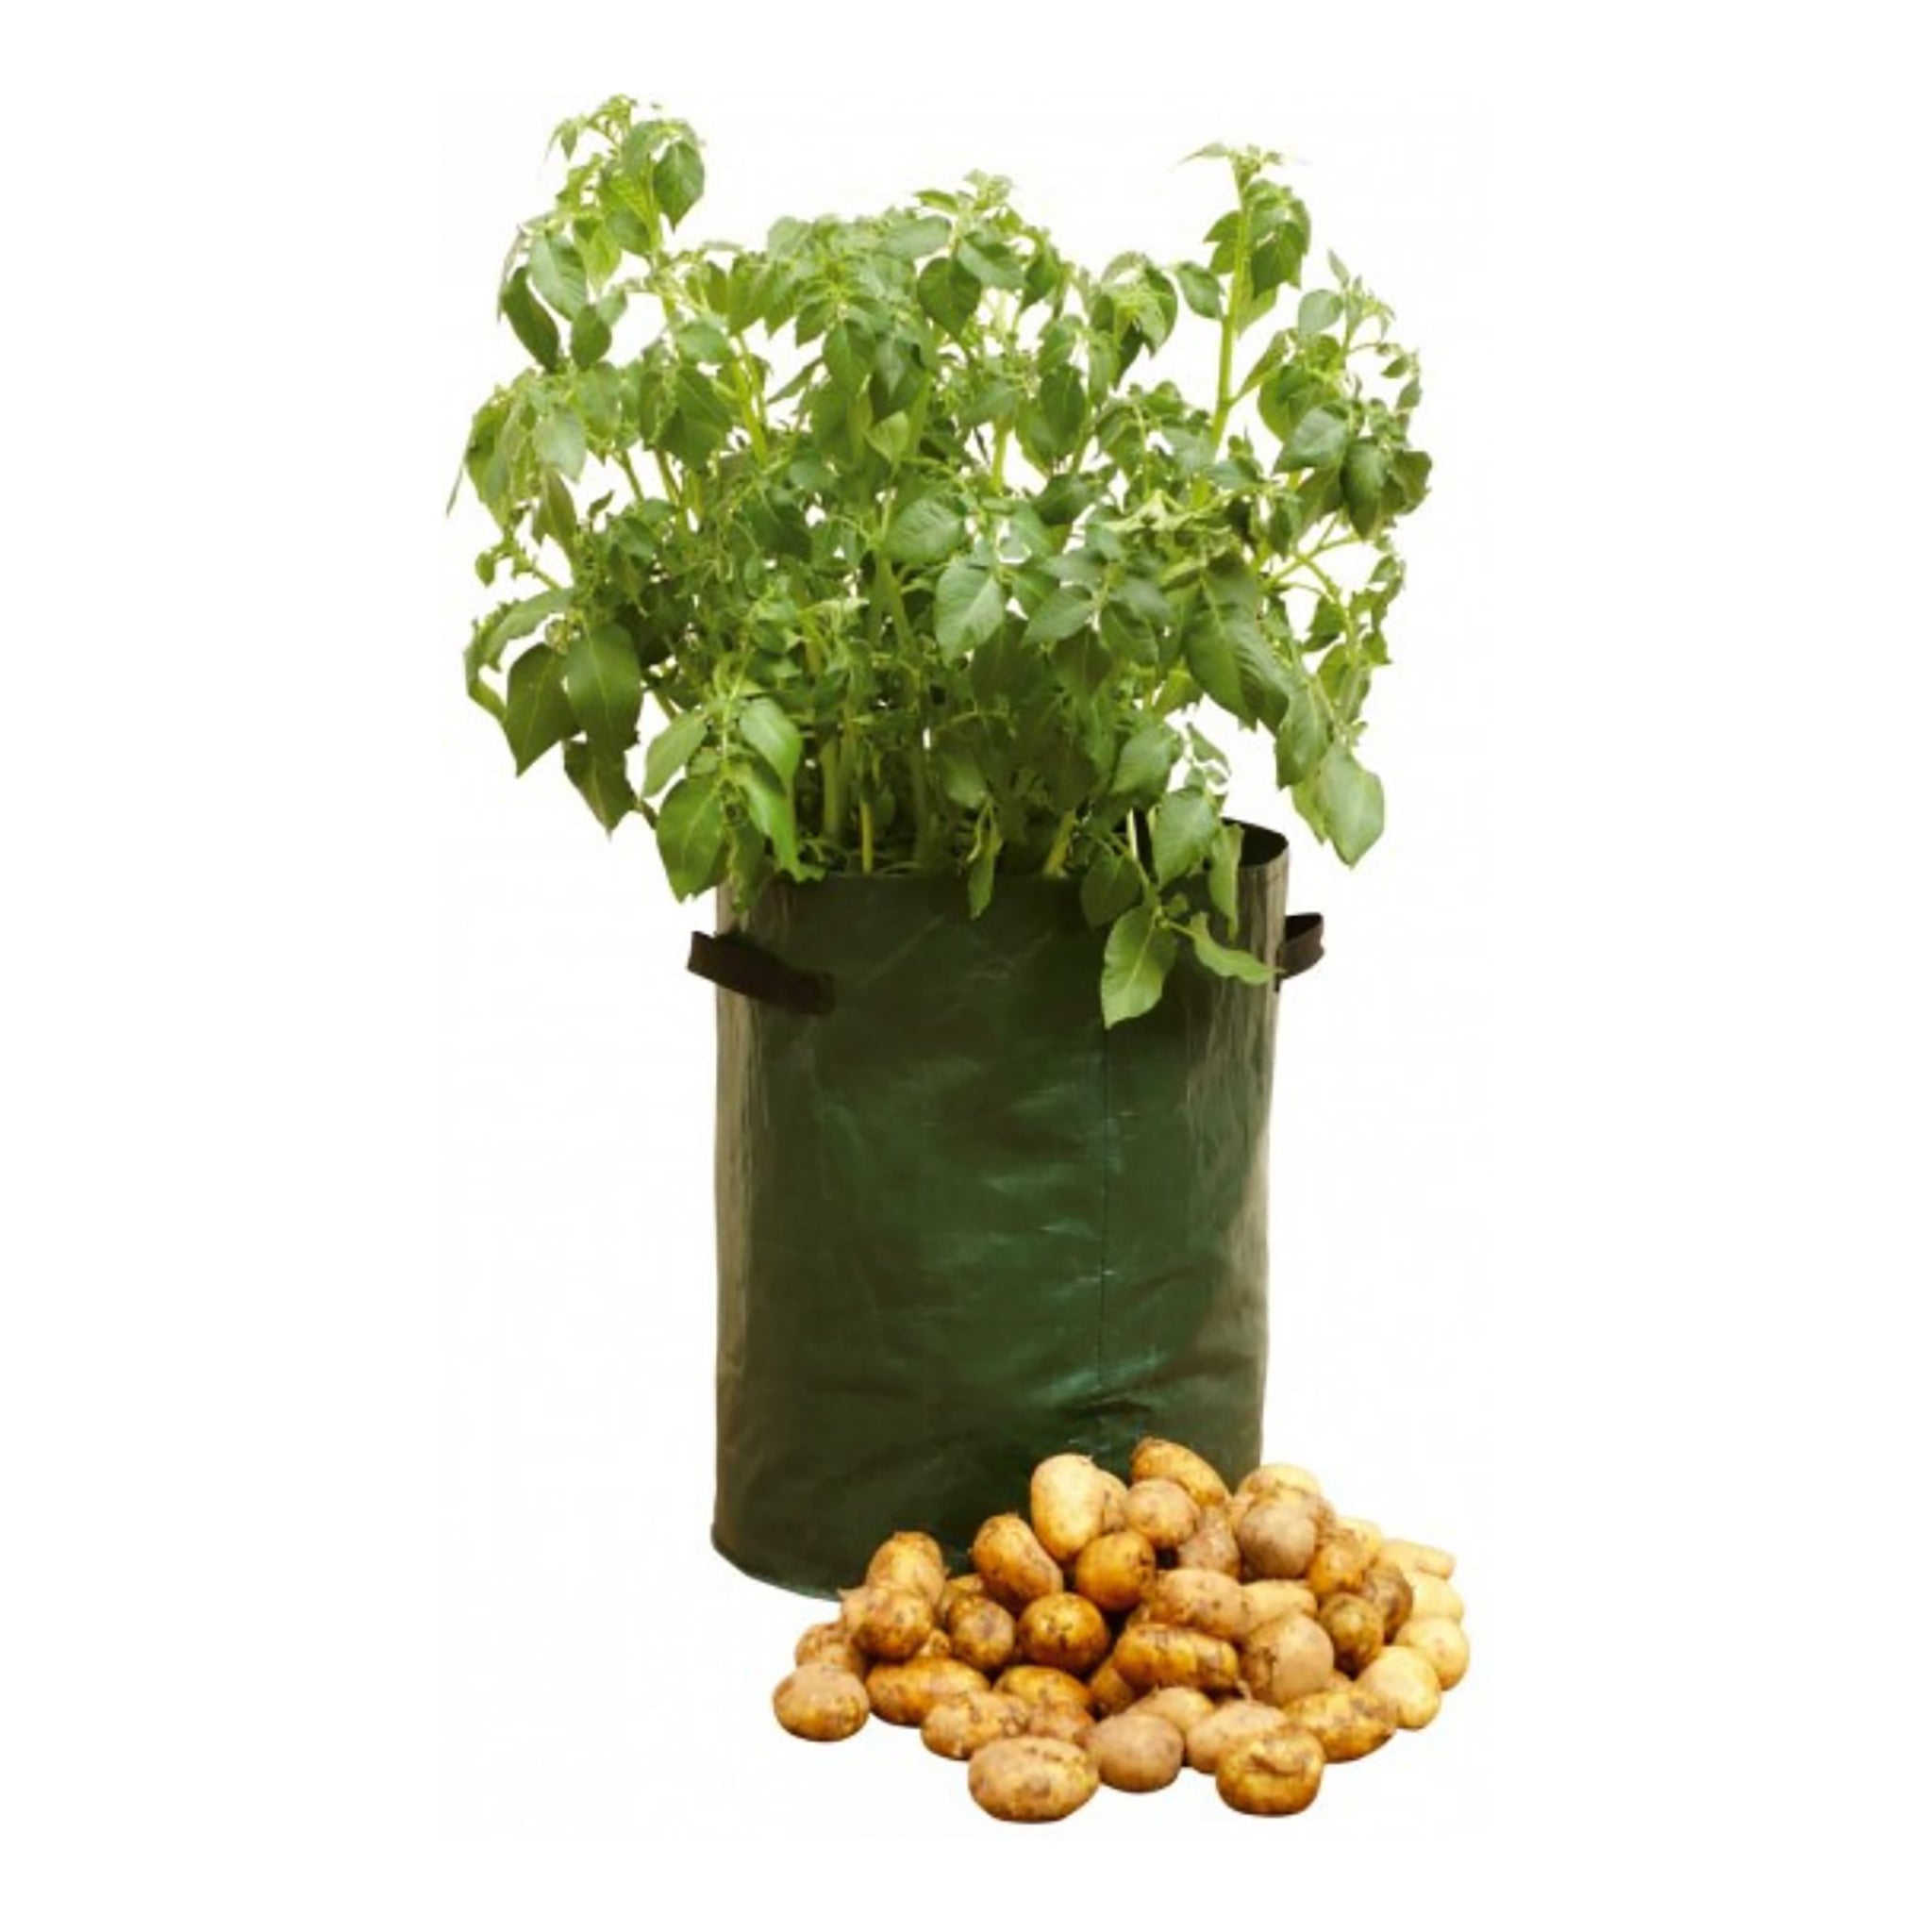 horticultural potato sack